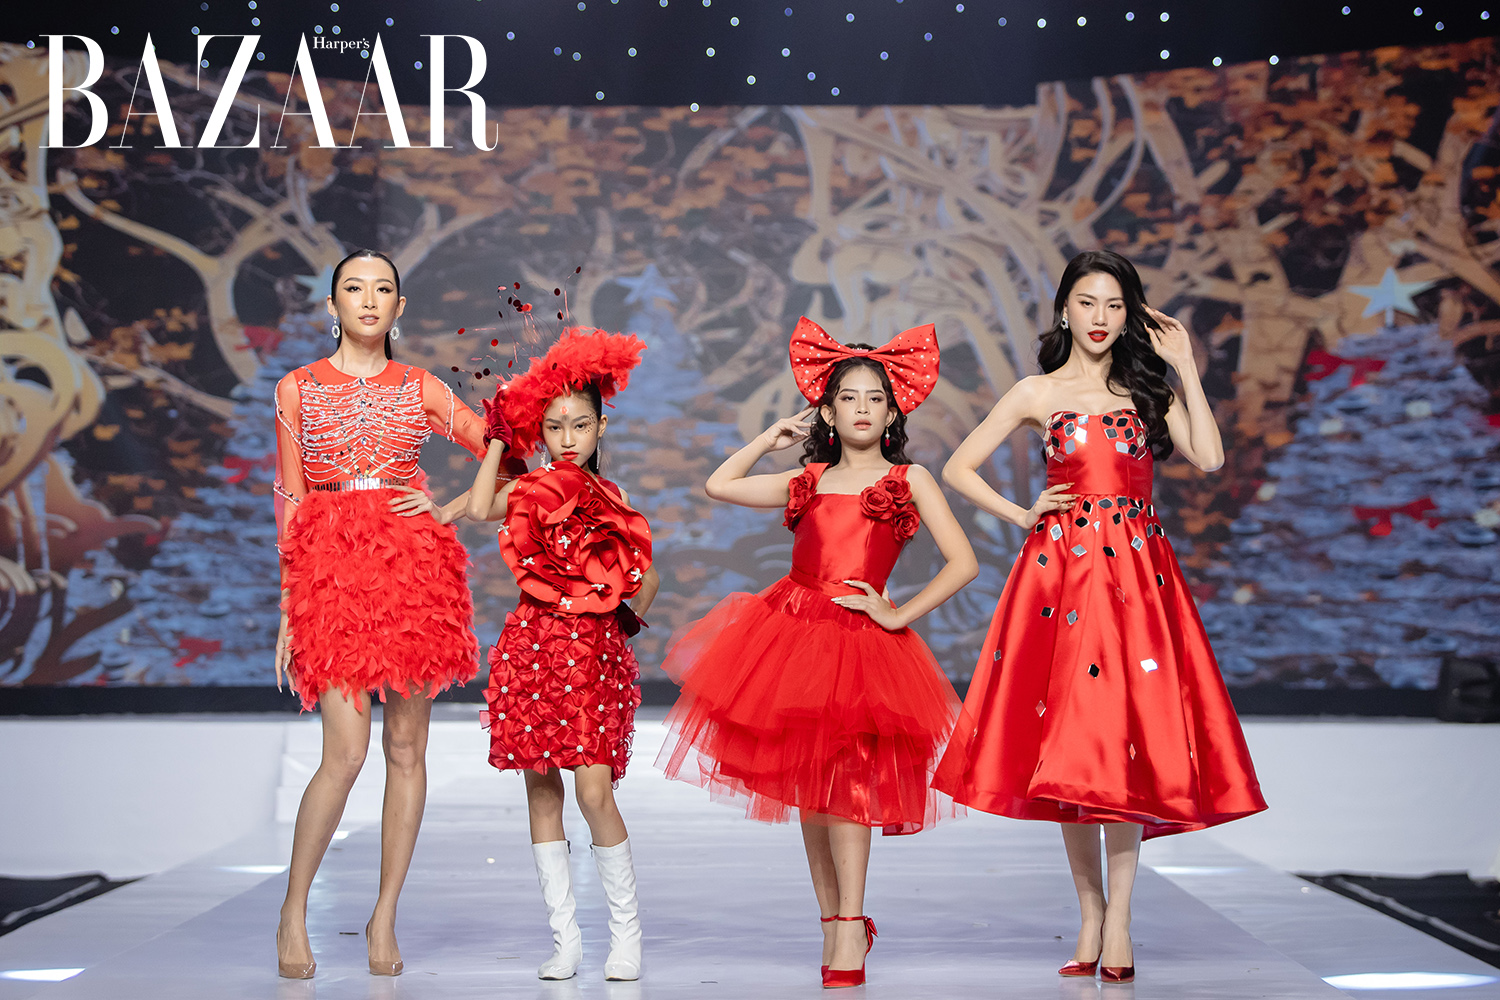 Harper's Bazaar_My Dream 2 fashion show 2022_02